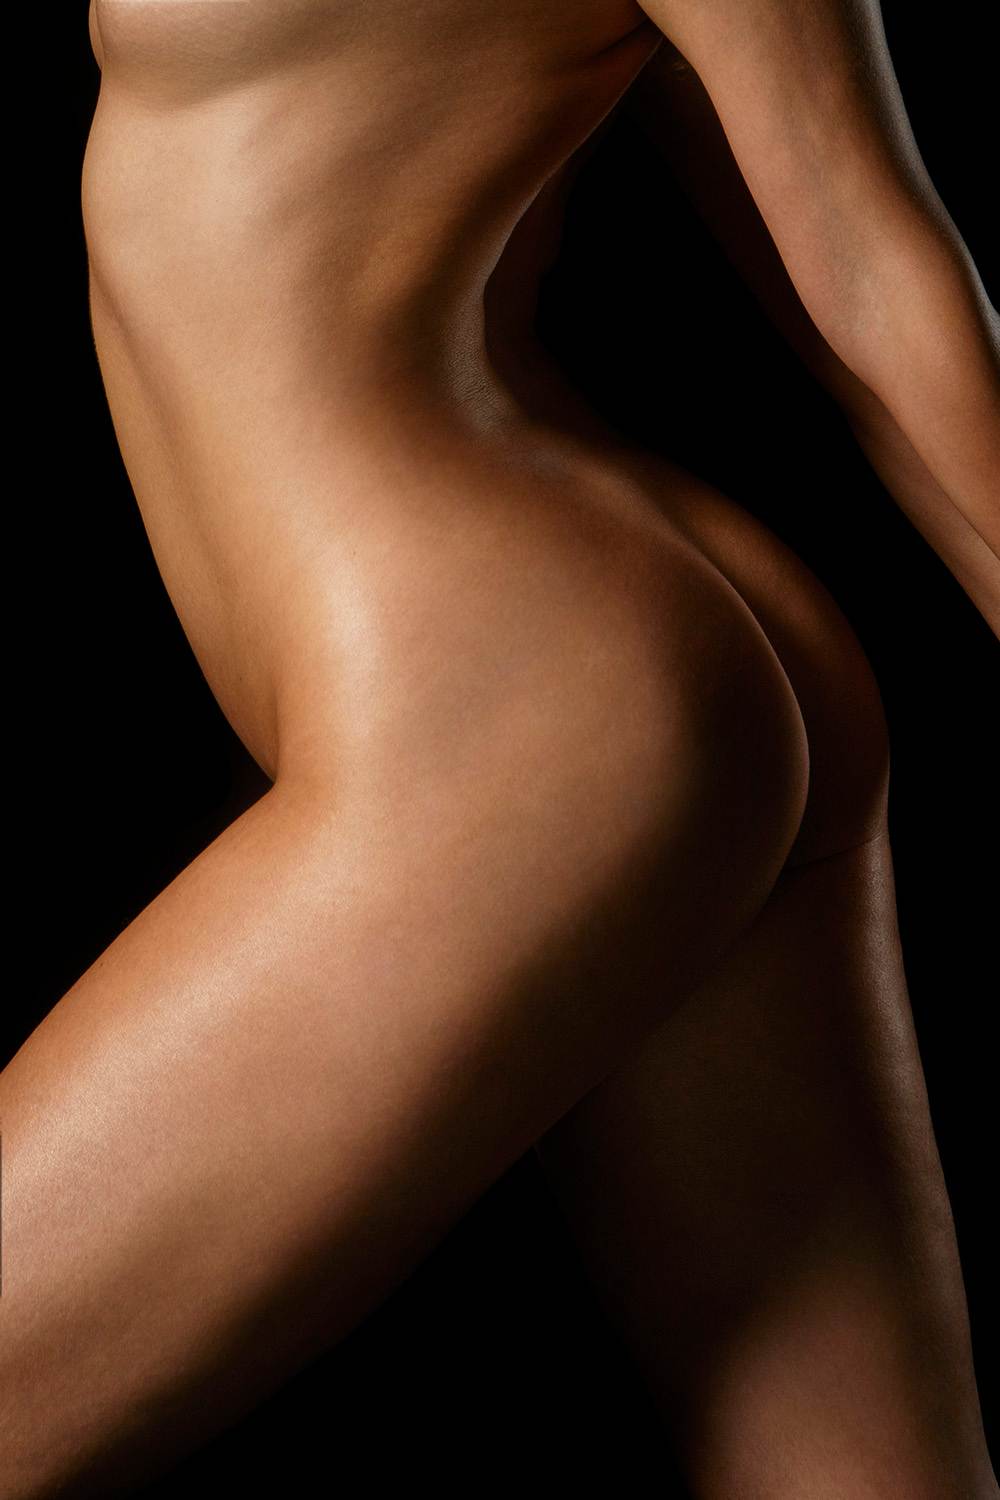 nude_strong_female_body_skin_healthy_bronze_dark_backround_dorit_thies_photography_los_angeles.jpg